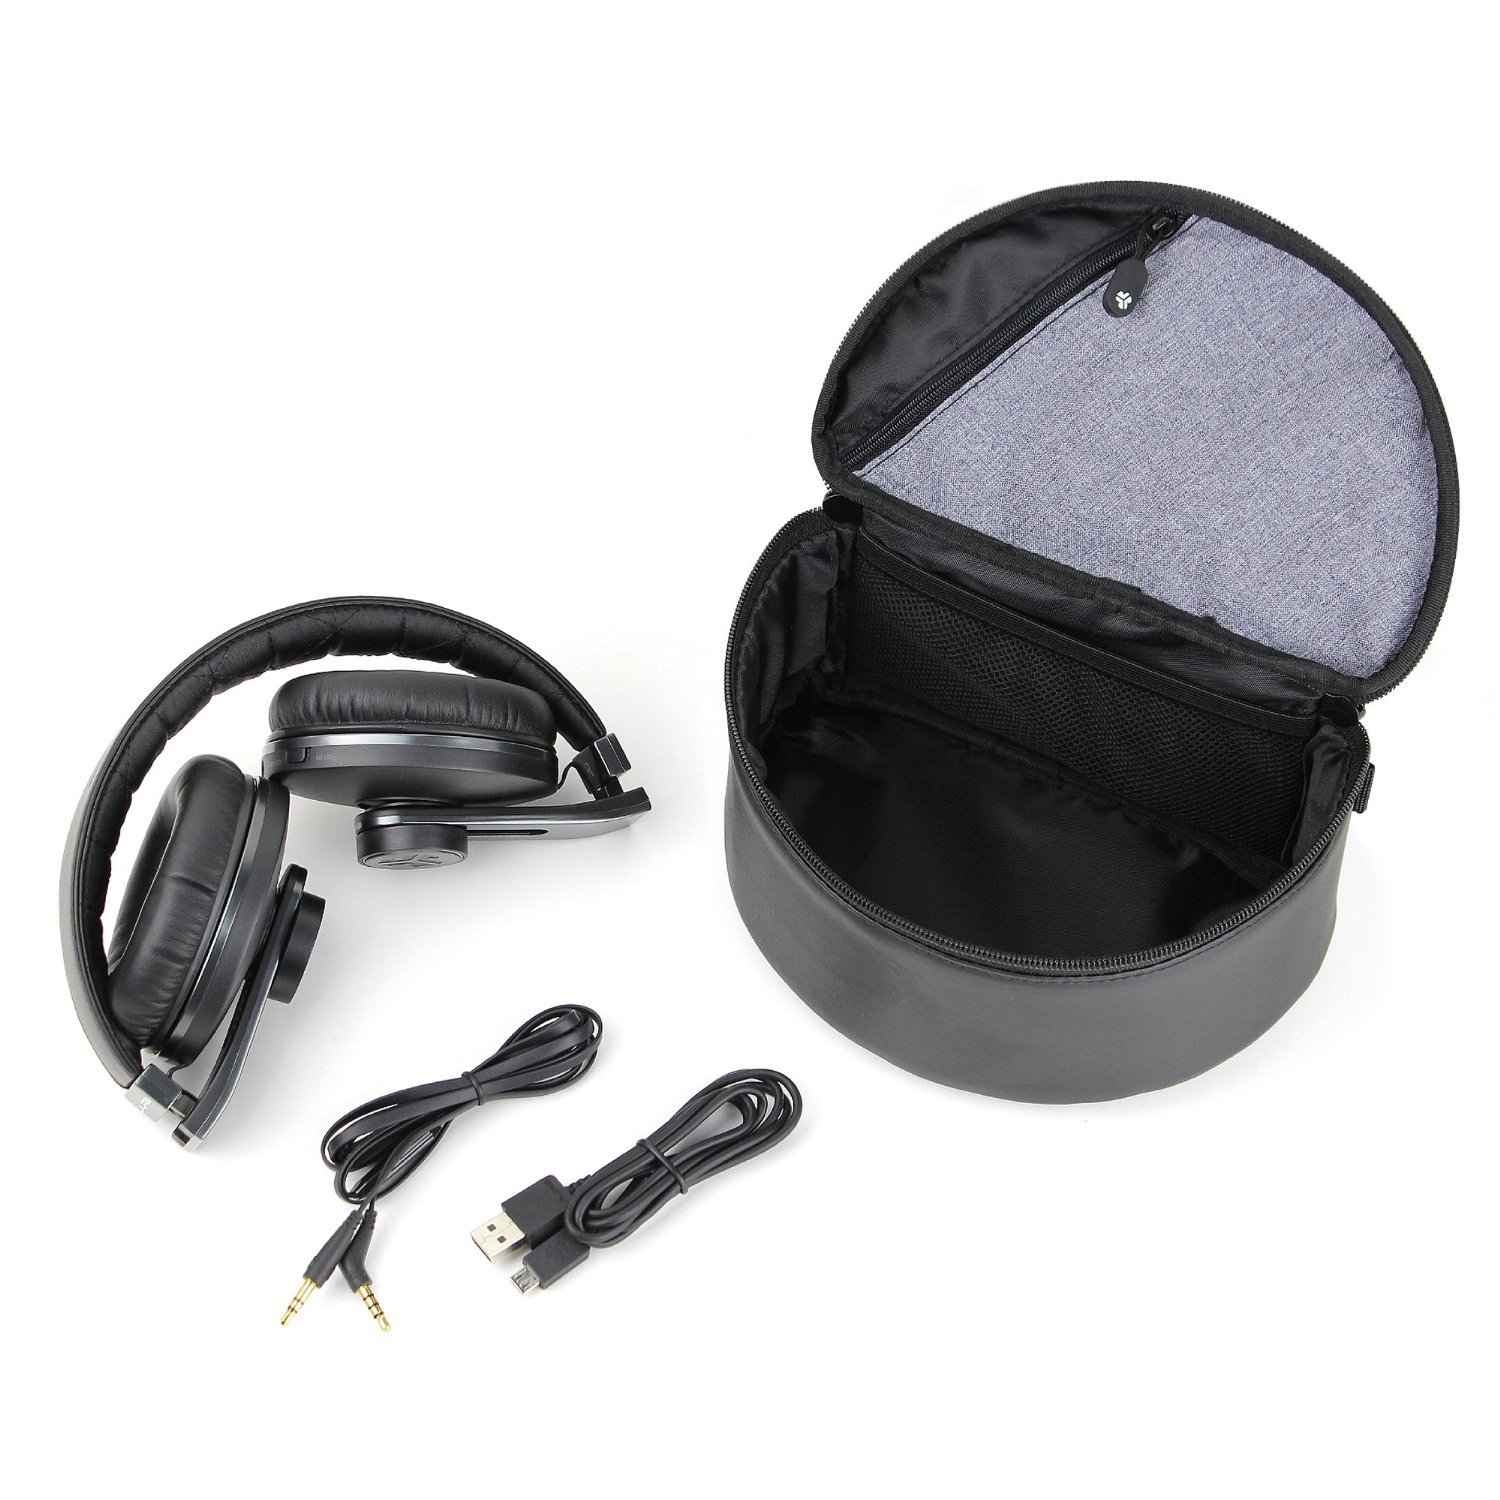 JLab Audio OMNI Premium Over-Ear Bluetooth Headphones with Mic - Black - image 4 of 7